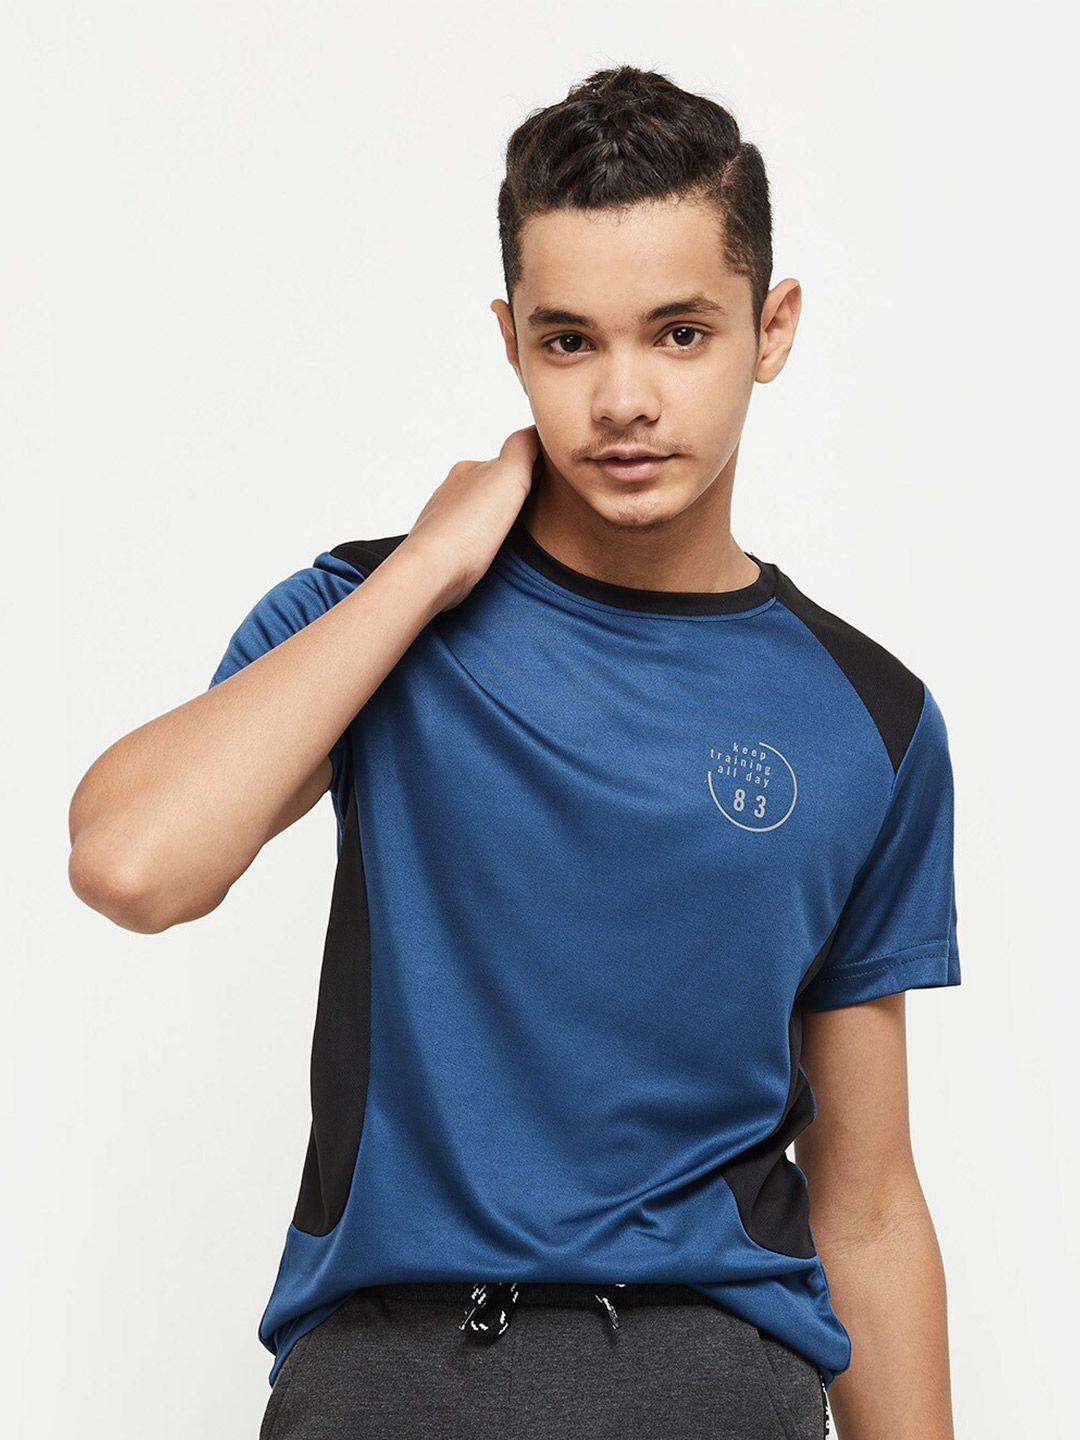 max Boys Blue & Black Colourblocked T-shirt